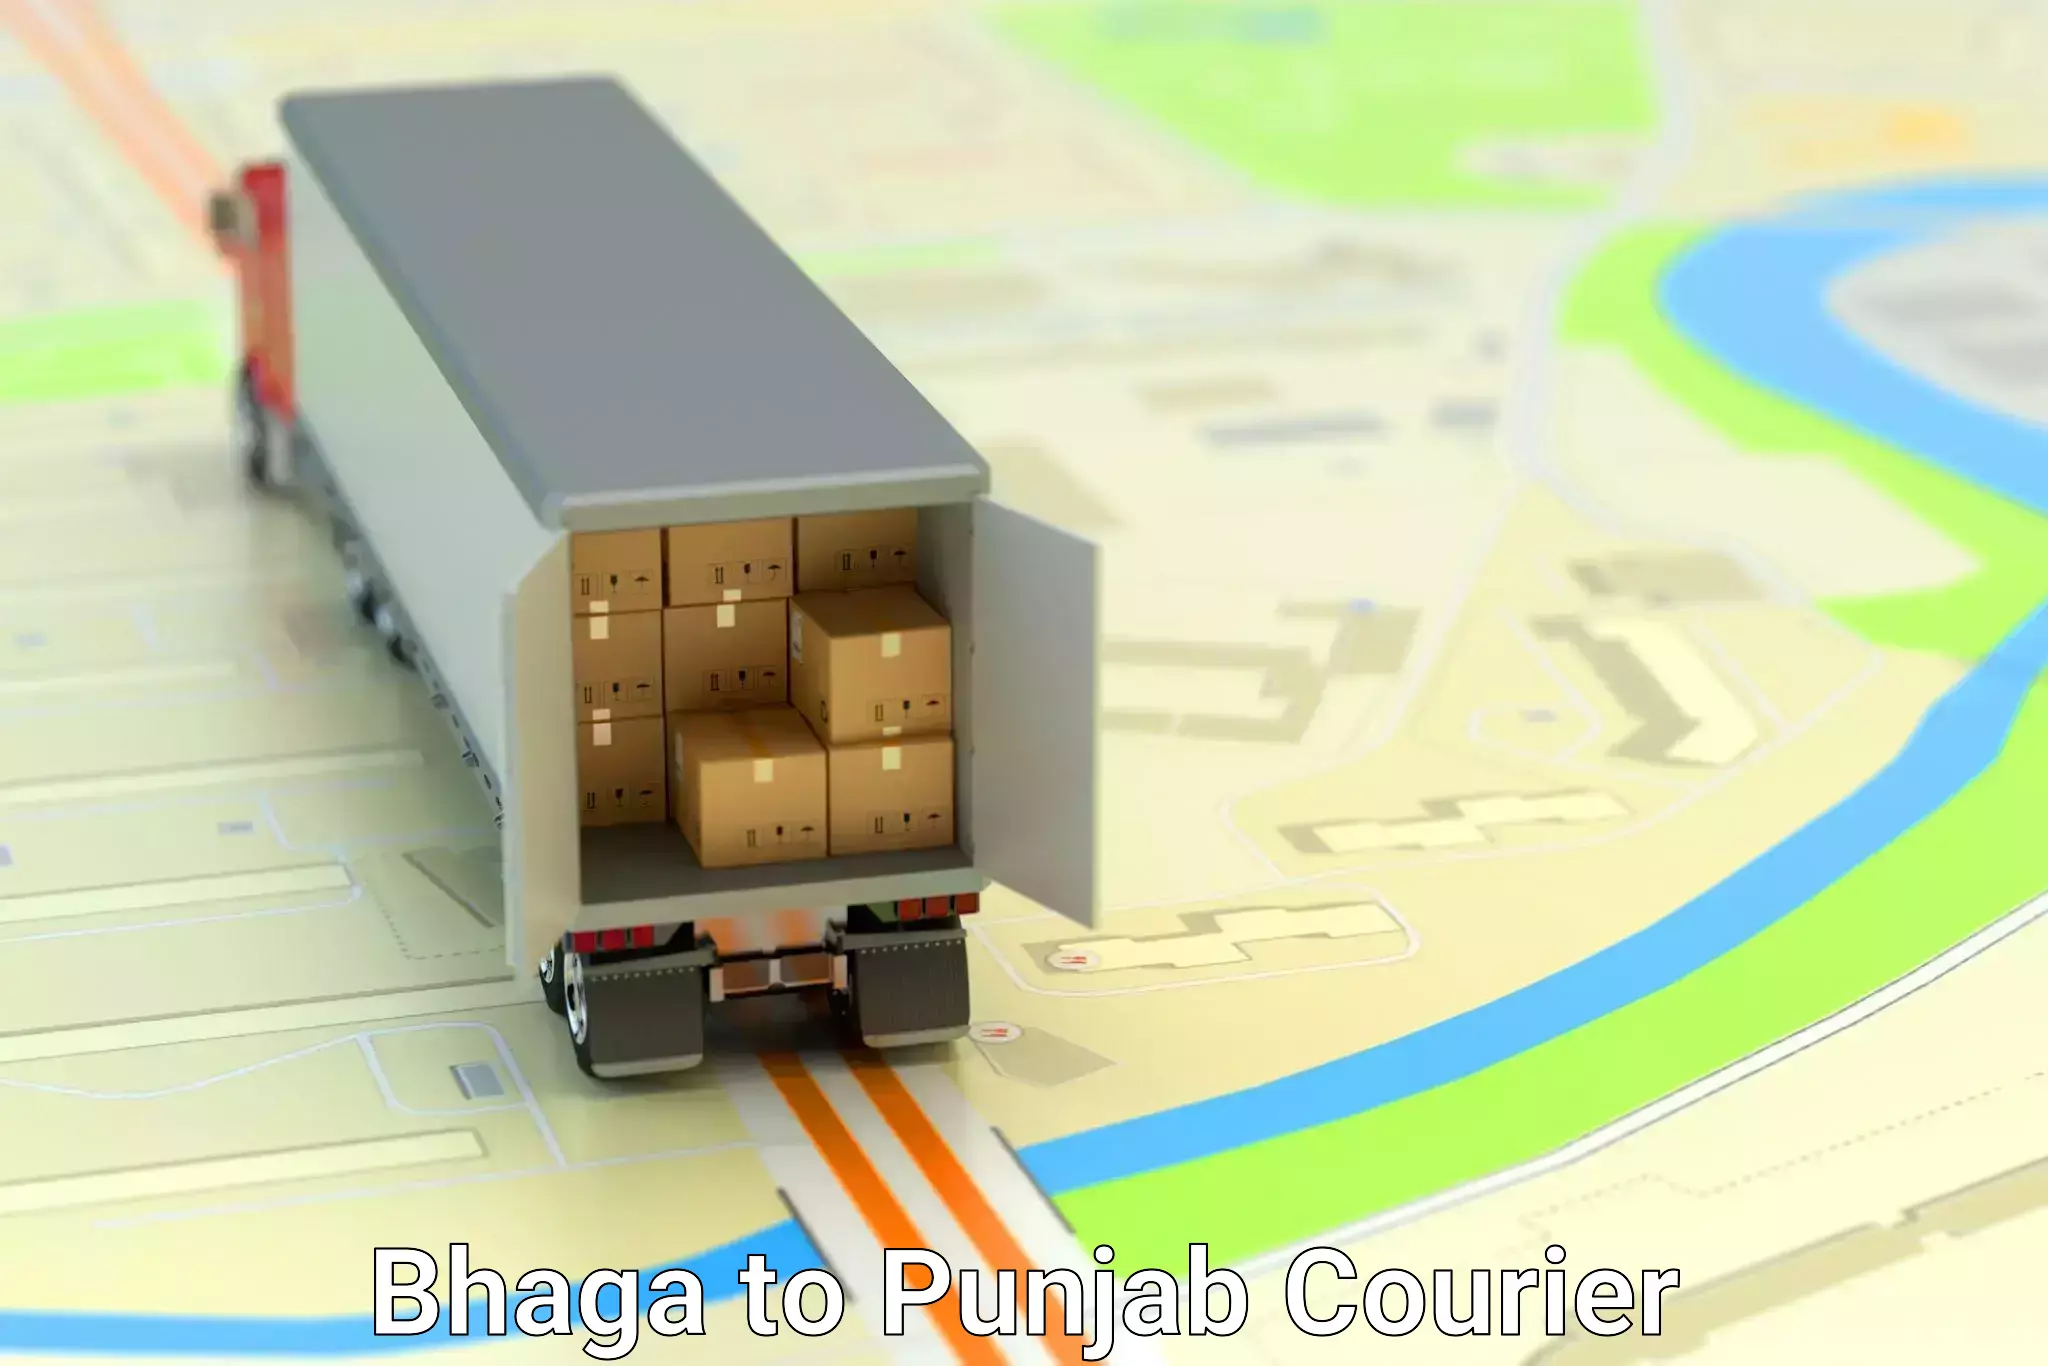 Cash on delivery service Bhaga to Dinanagar